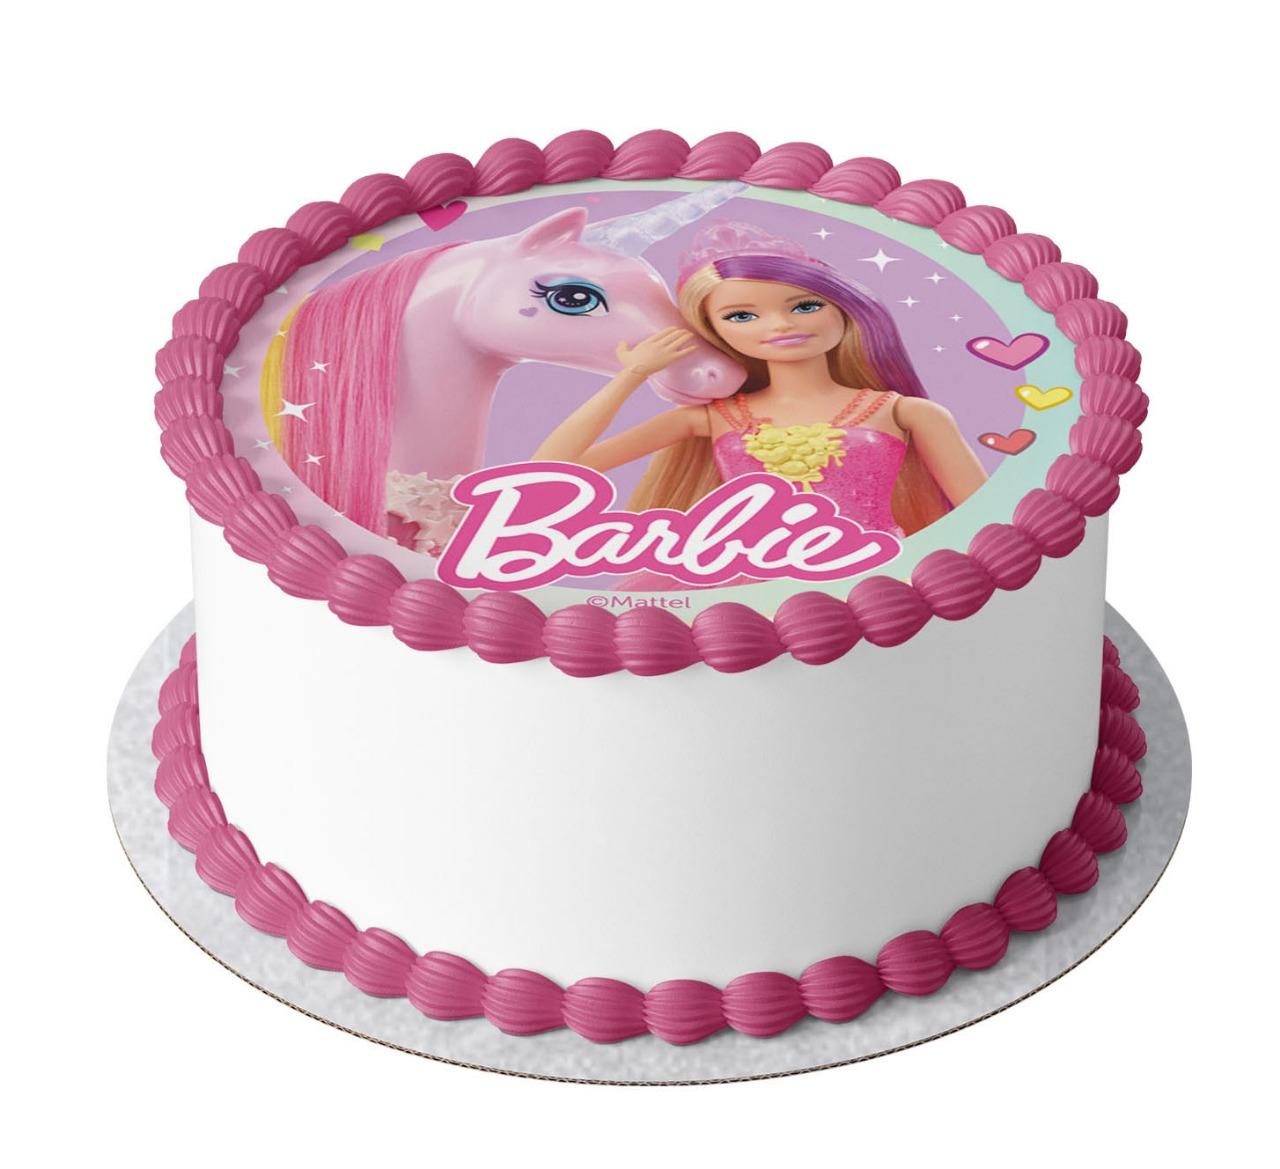 Barbie birthday cake